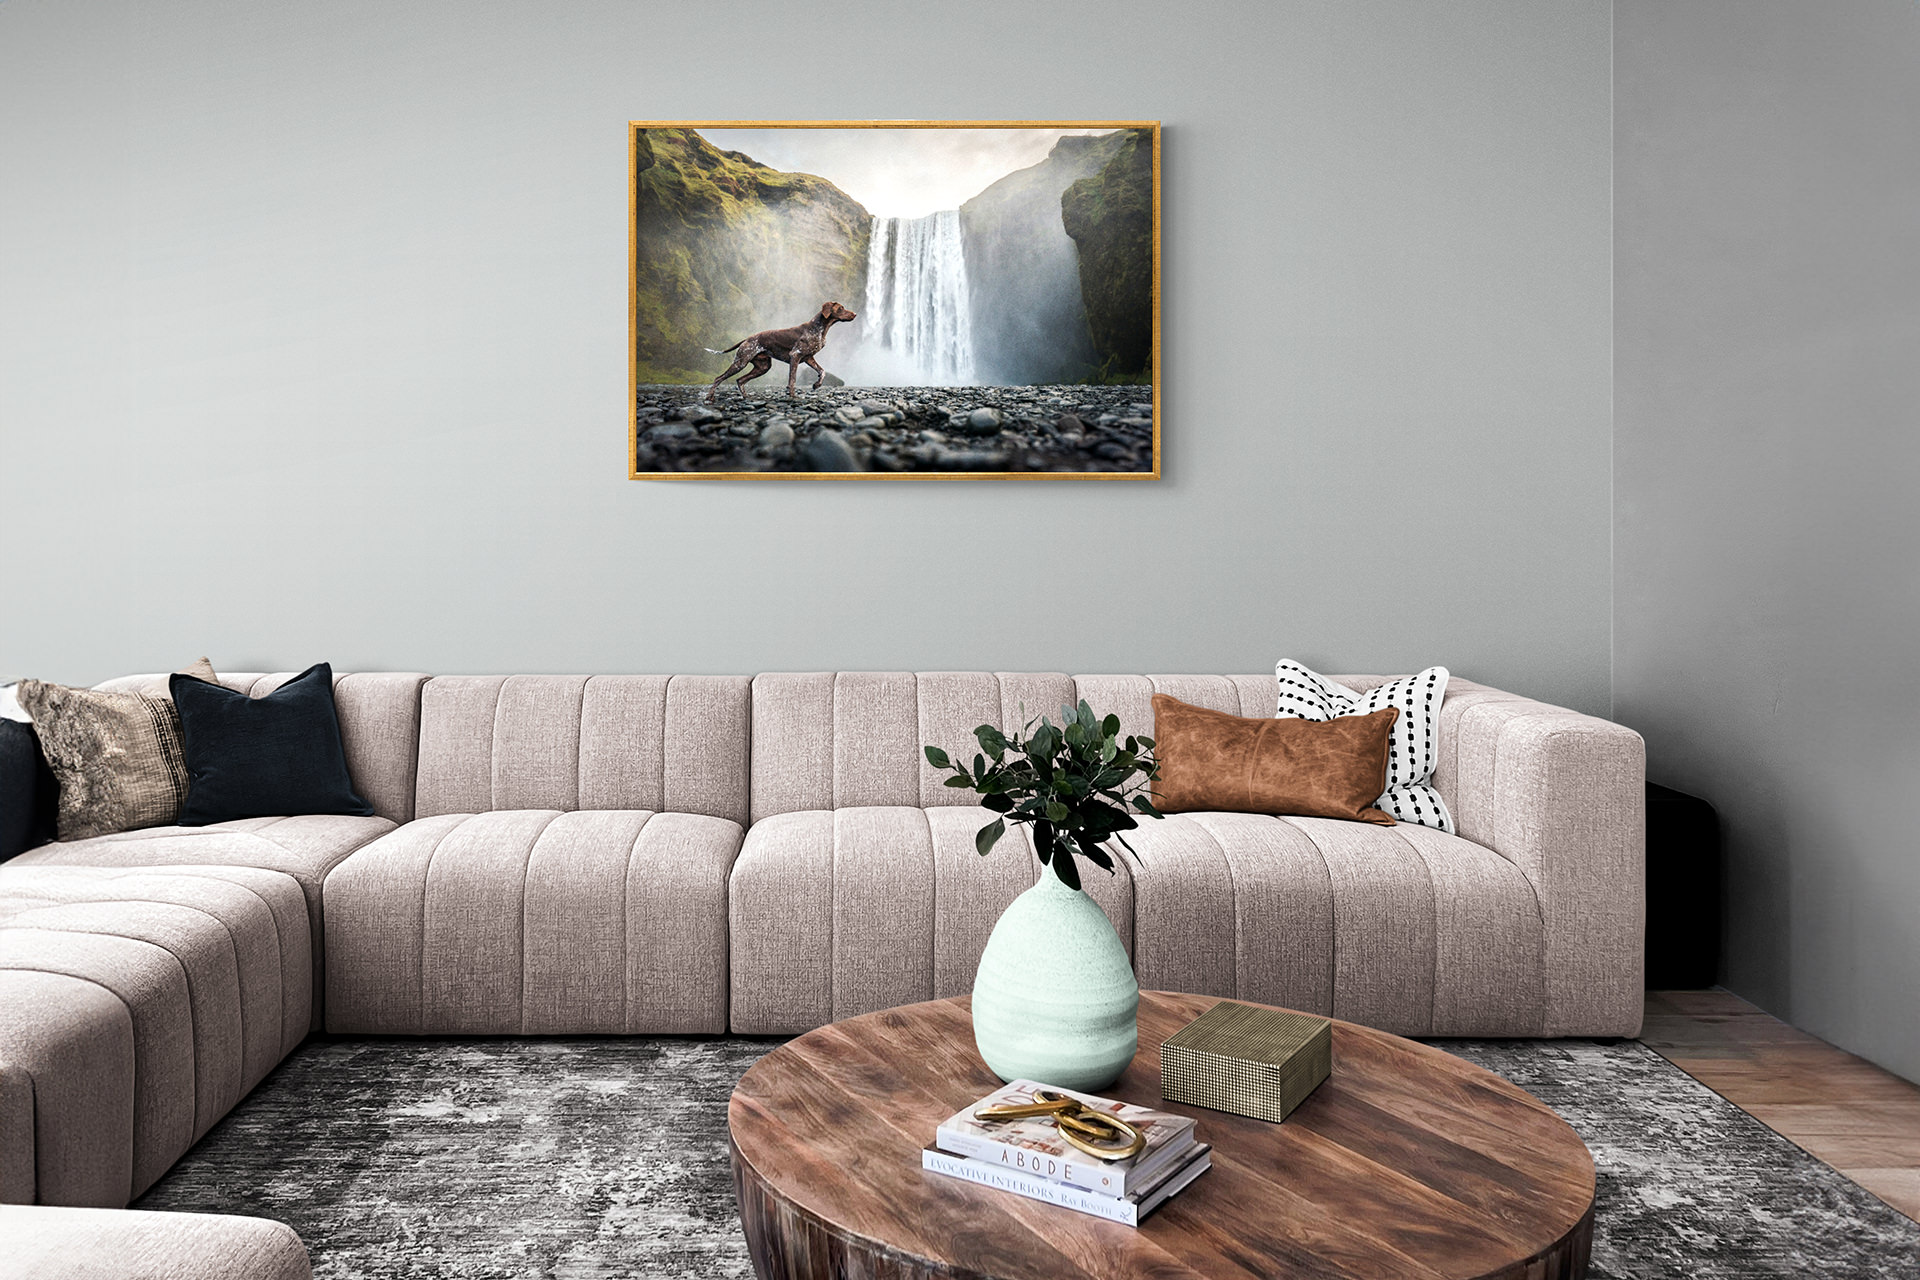 Modern living room with framed waterfall artwork.